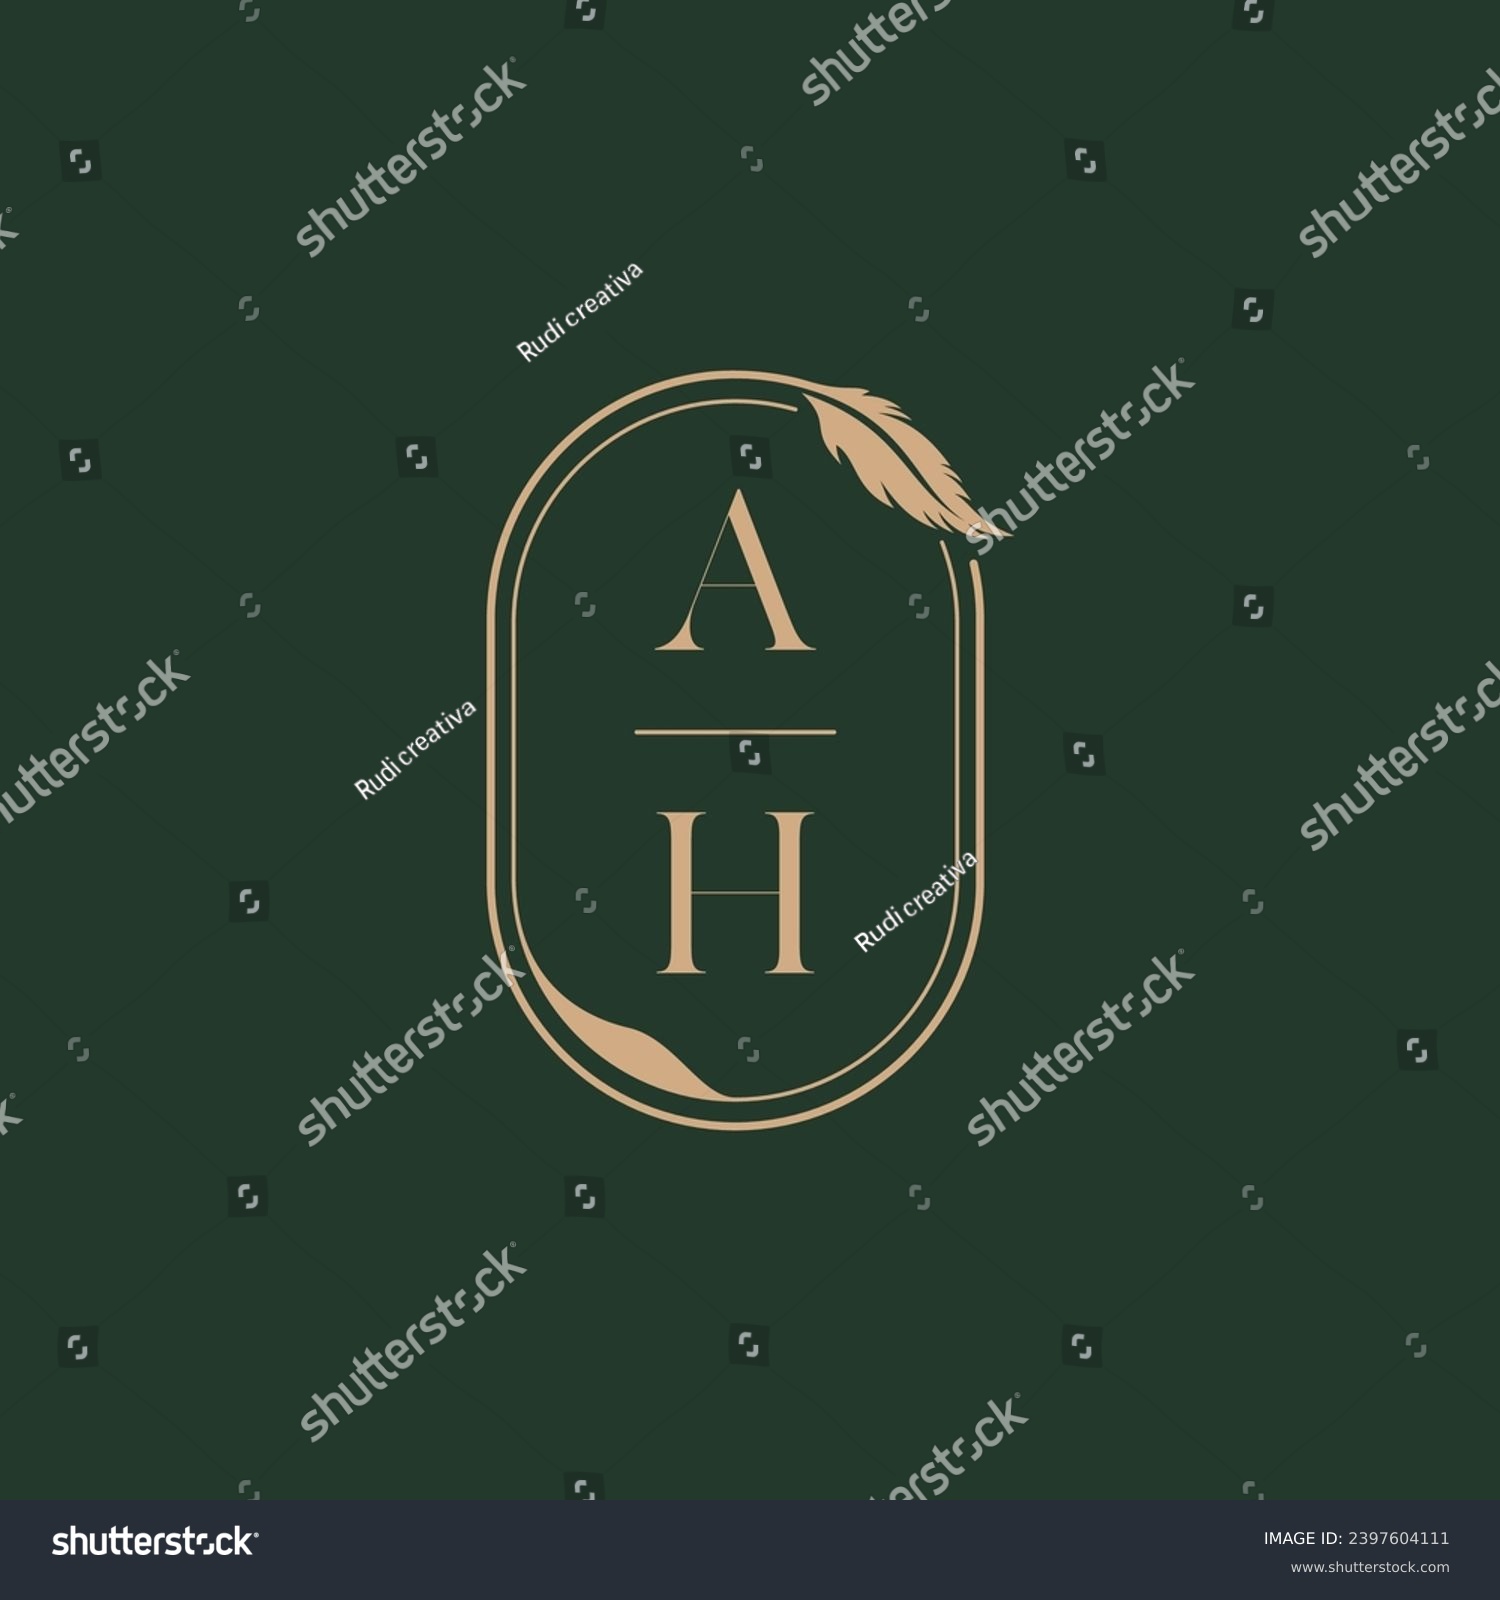 SVG of AH feather concept wedding monogram logo design ideas as inspiration svg